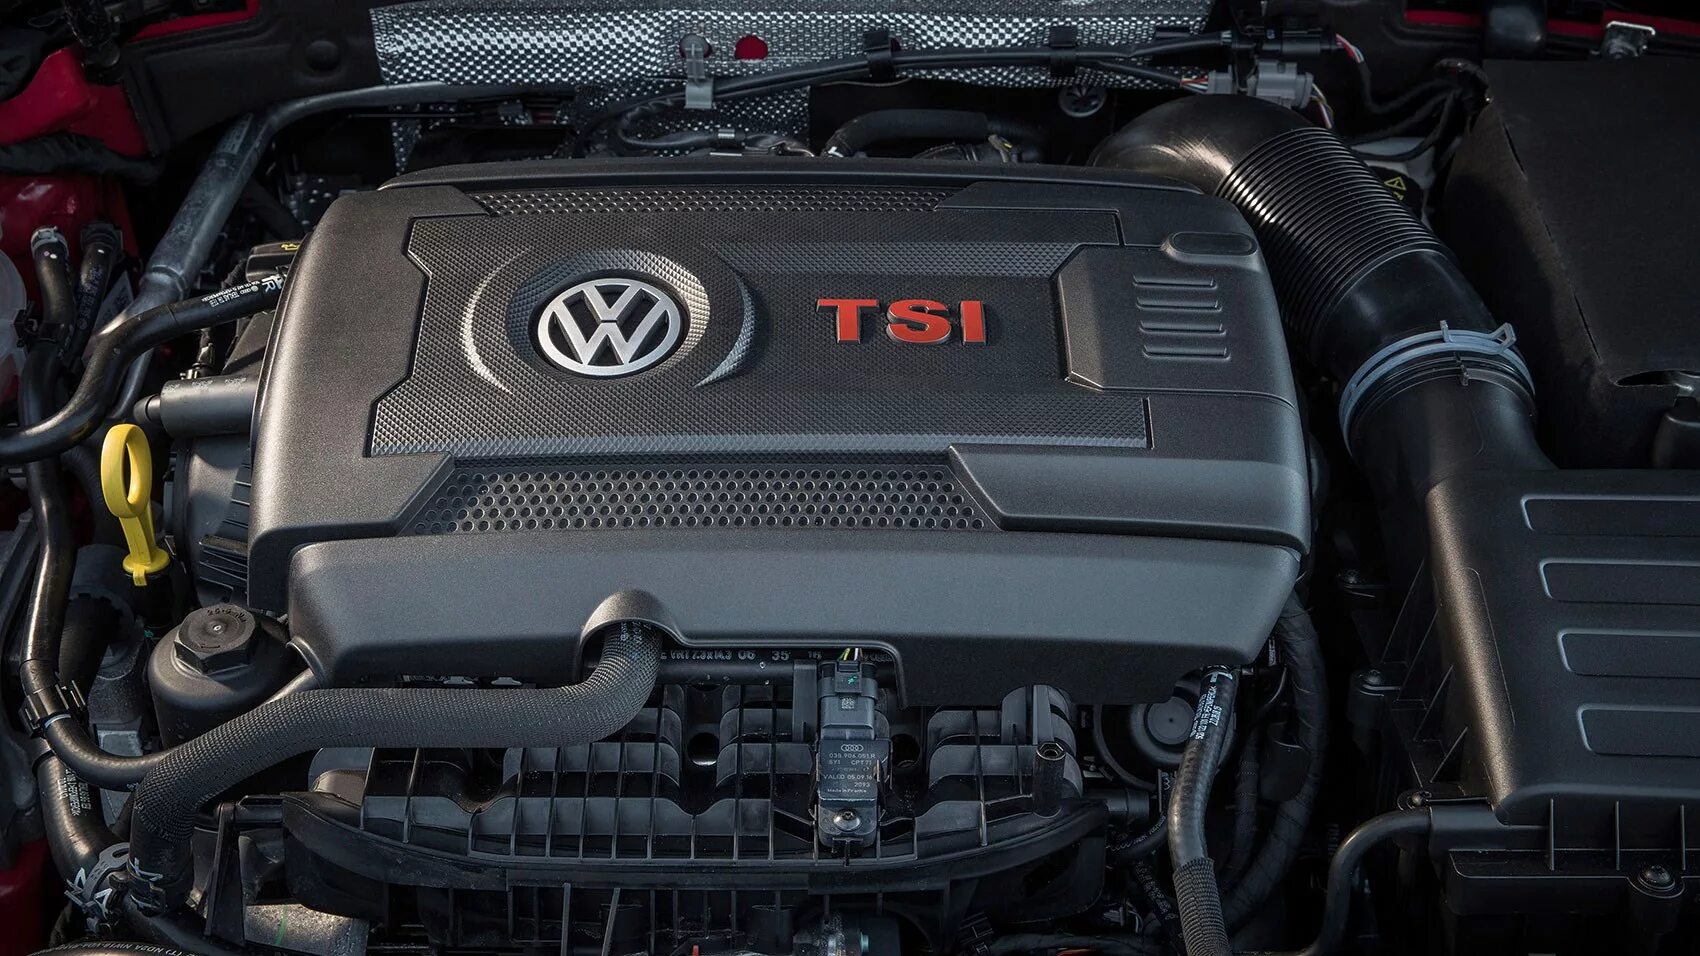 Двигатель Volkswagen TSI 2.0. Volkswagen Golf TSI 2.0. Фольксваген гольф 7 TSI. Гольф 7 2.0 TSI. Двигатель на автомобиль volkswagen